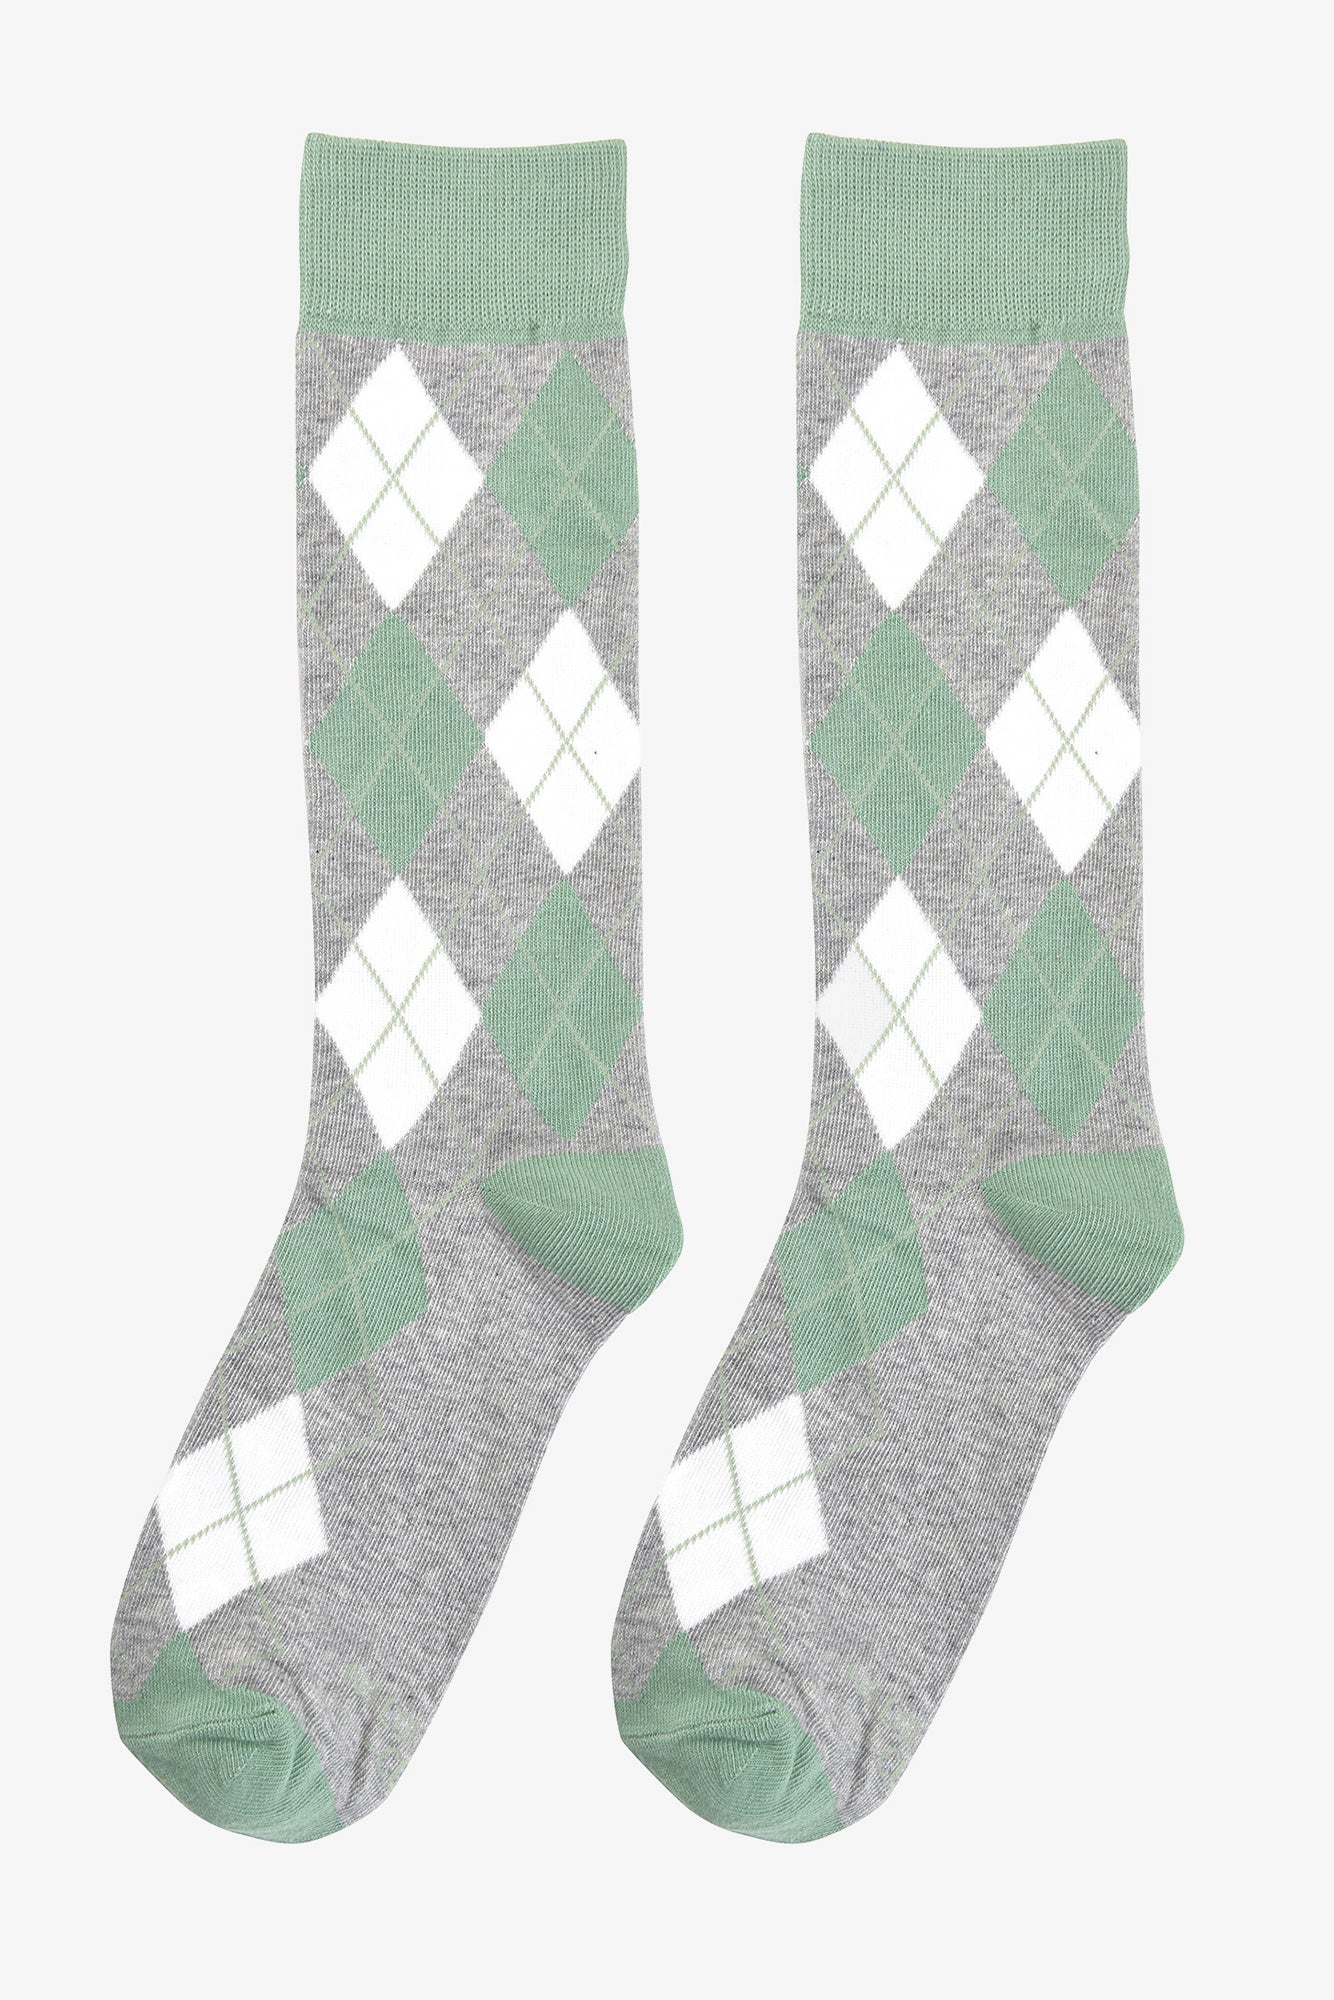 Sage Argyle Groomsmen Socks by No Cold Feet